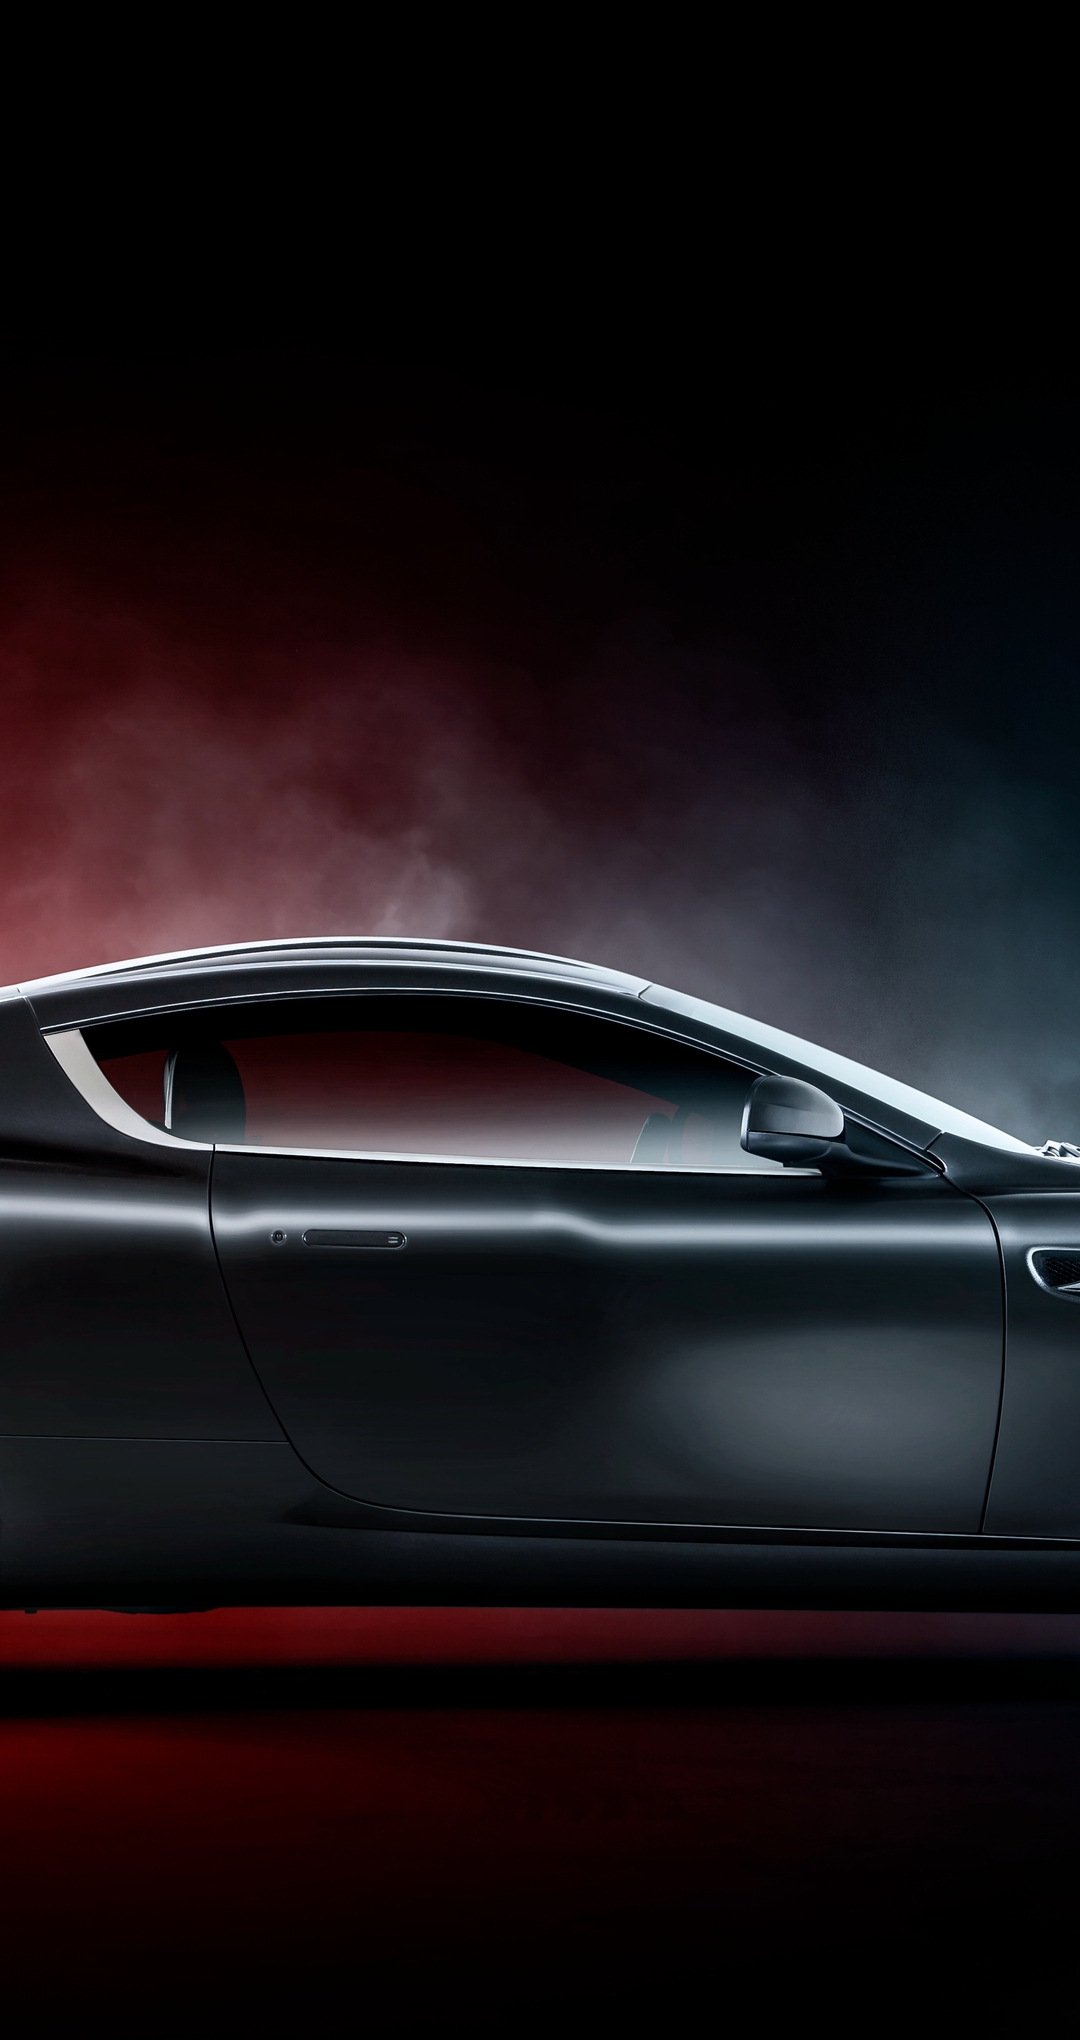 Image: Car, smoke, supercar, black, wheels, Aston Martin